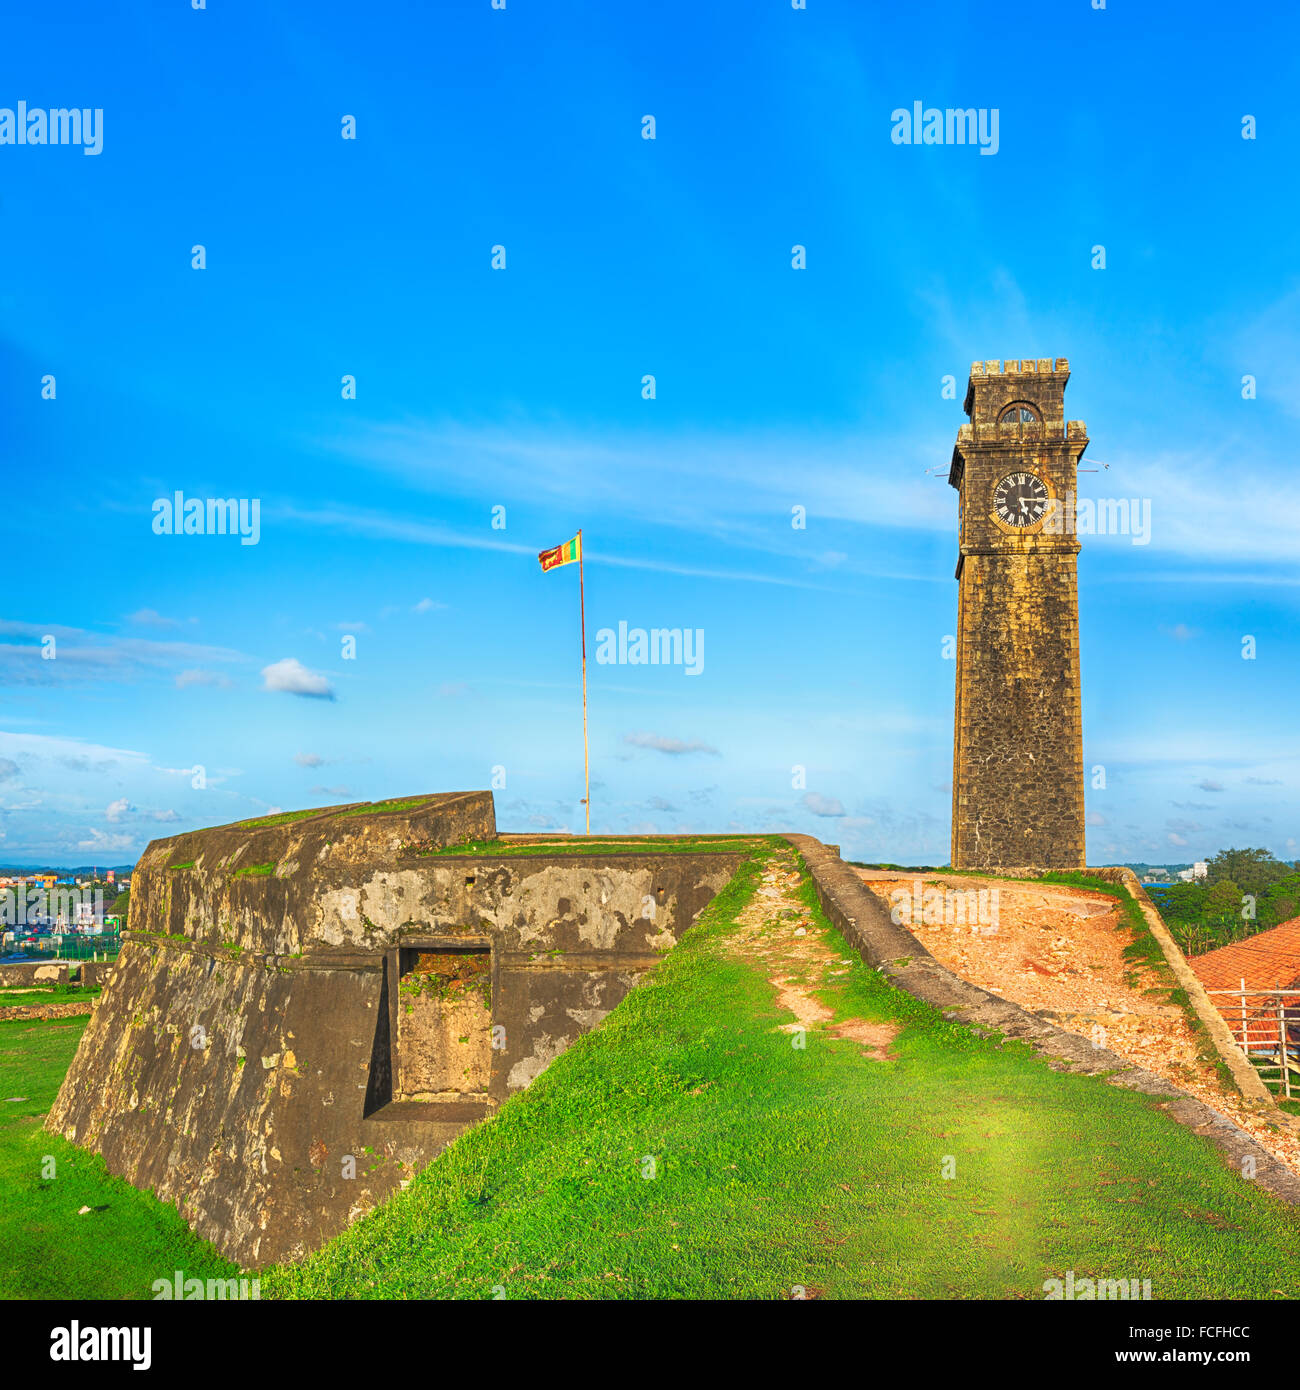 Anthonisz Memorial Clock Tower in Galle, Sri Lanka Stock Photo